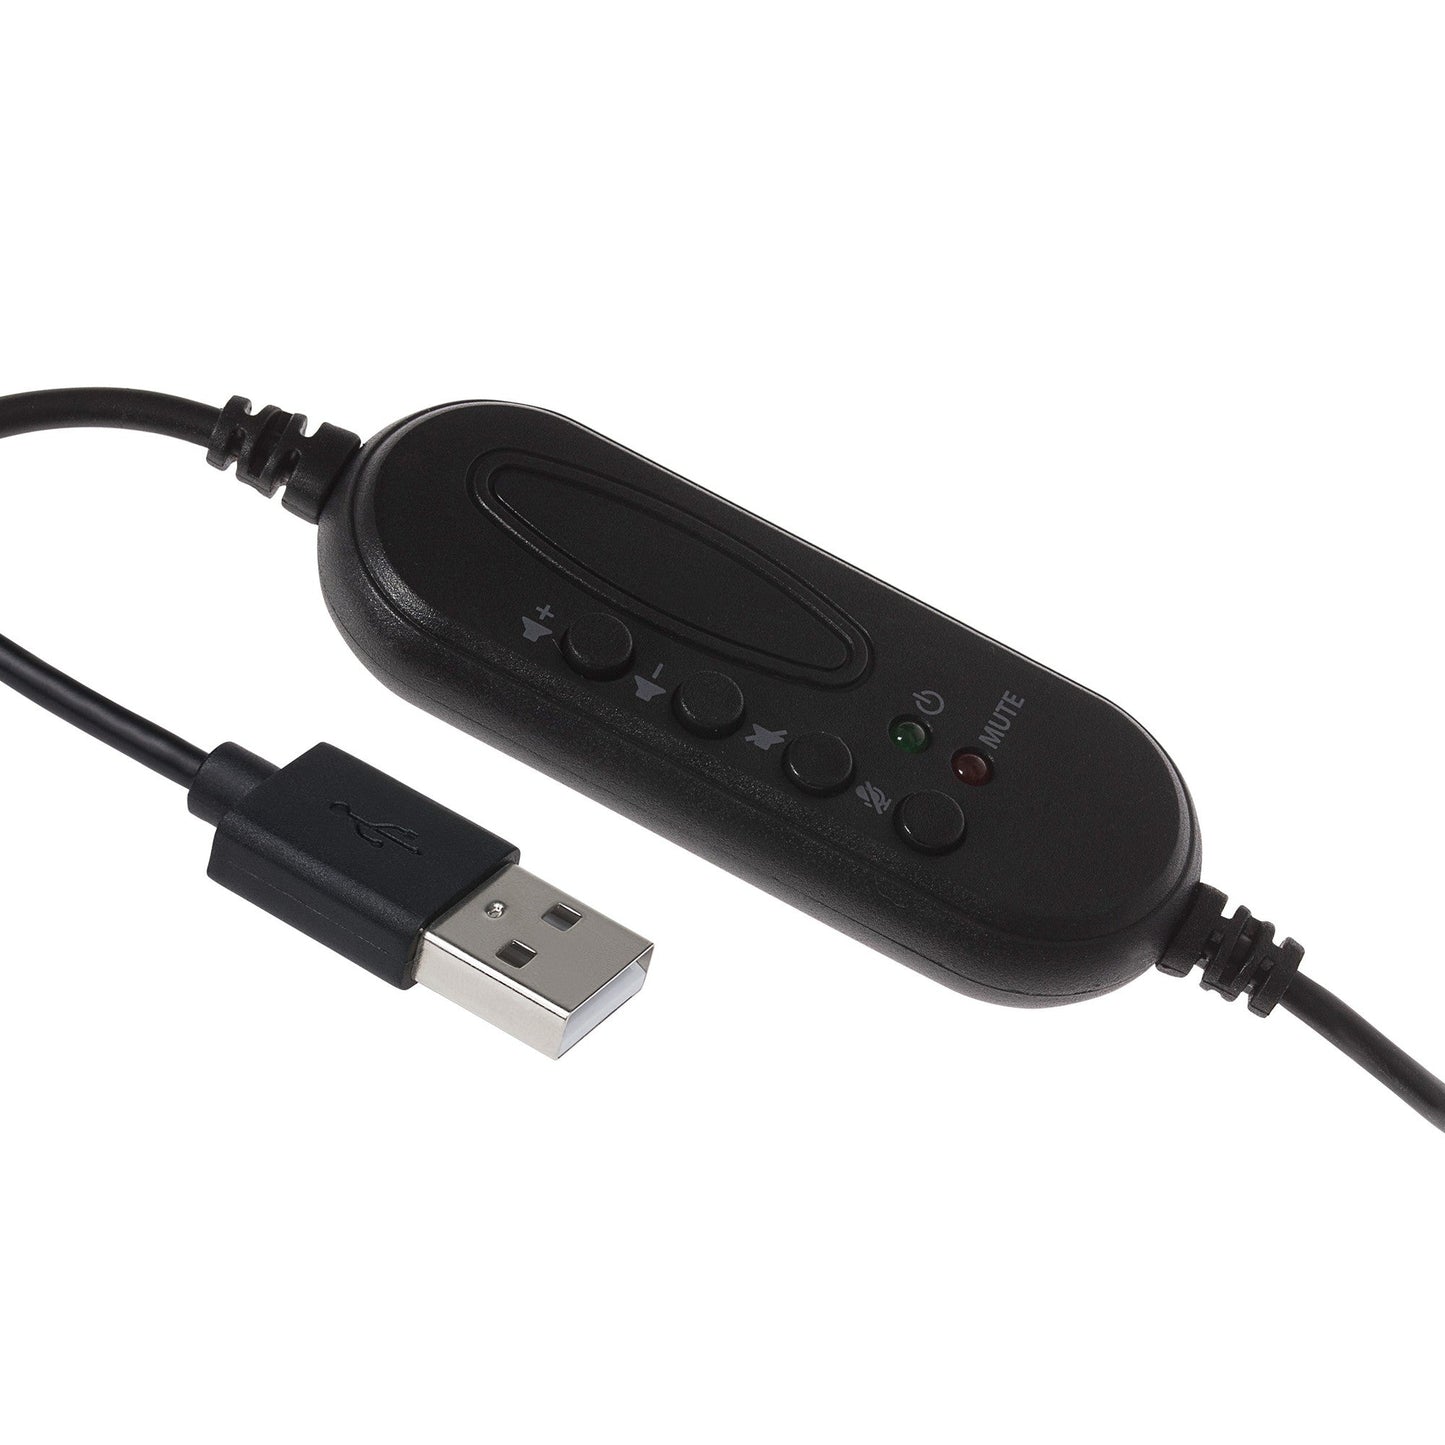 ProSound Single Ear Mono USB-C Headset Boom Microphone Noise Cancellation - maplin.co.uk